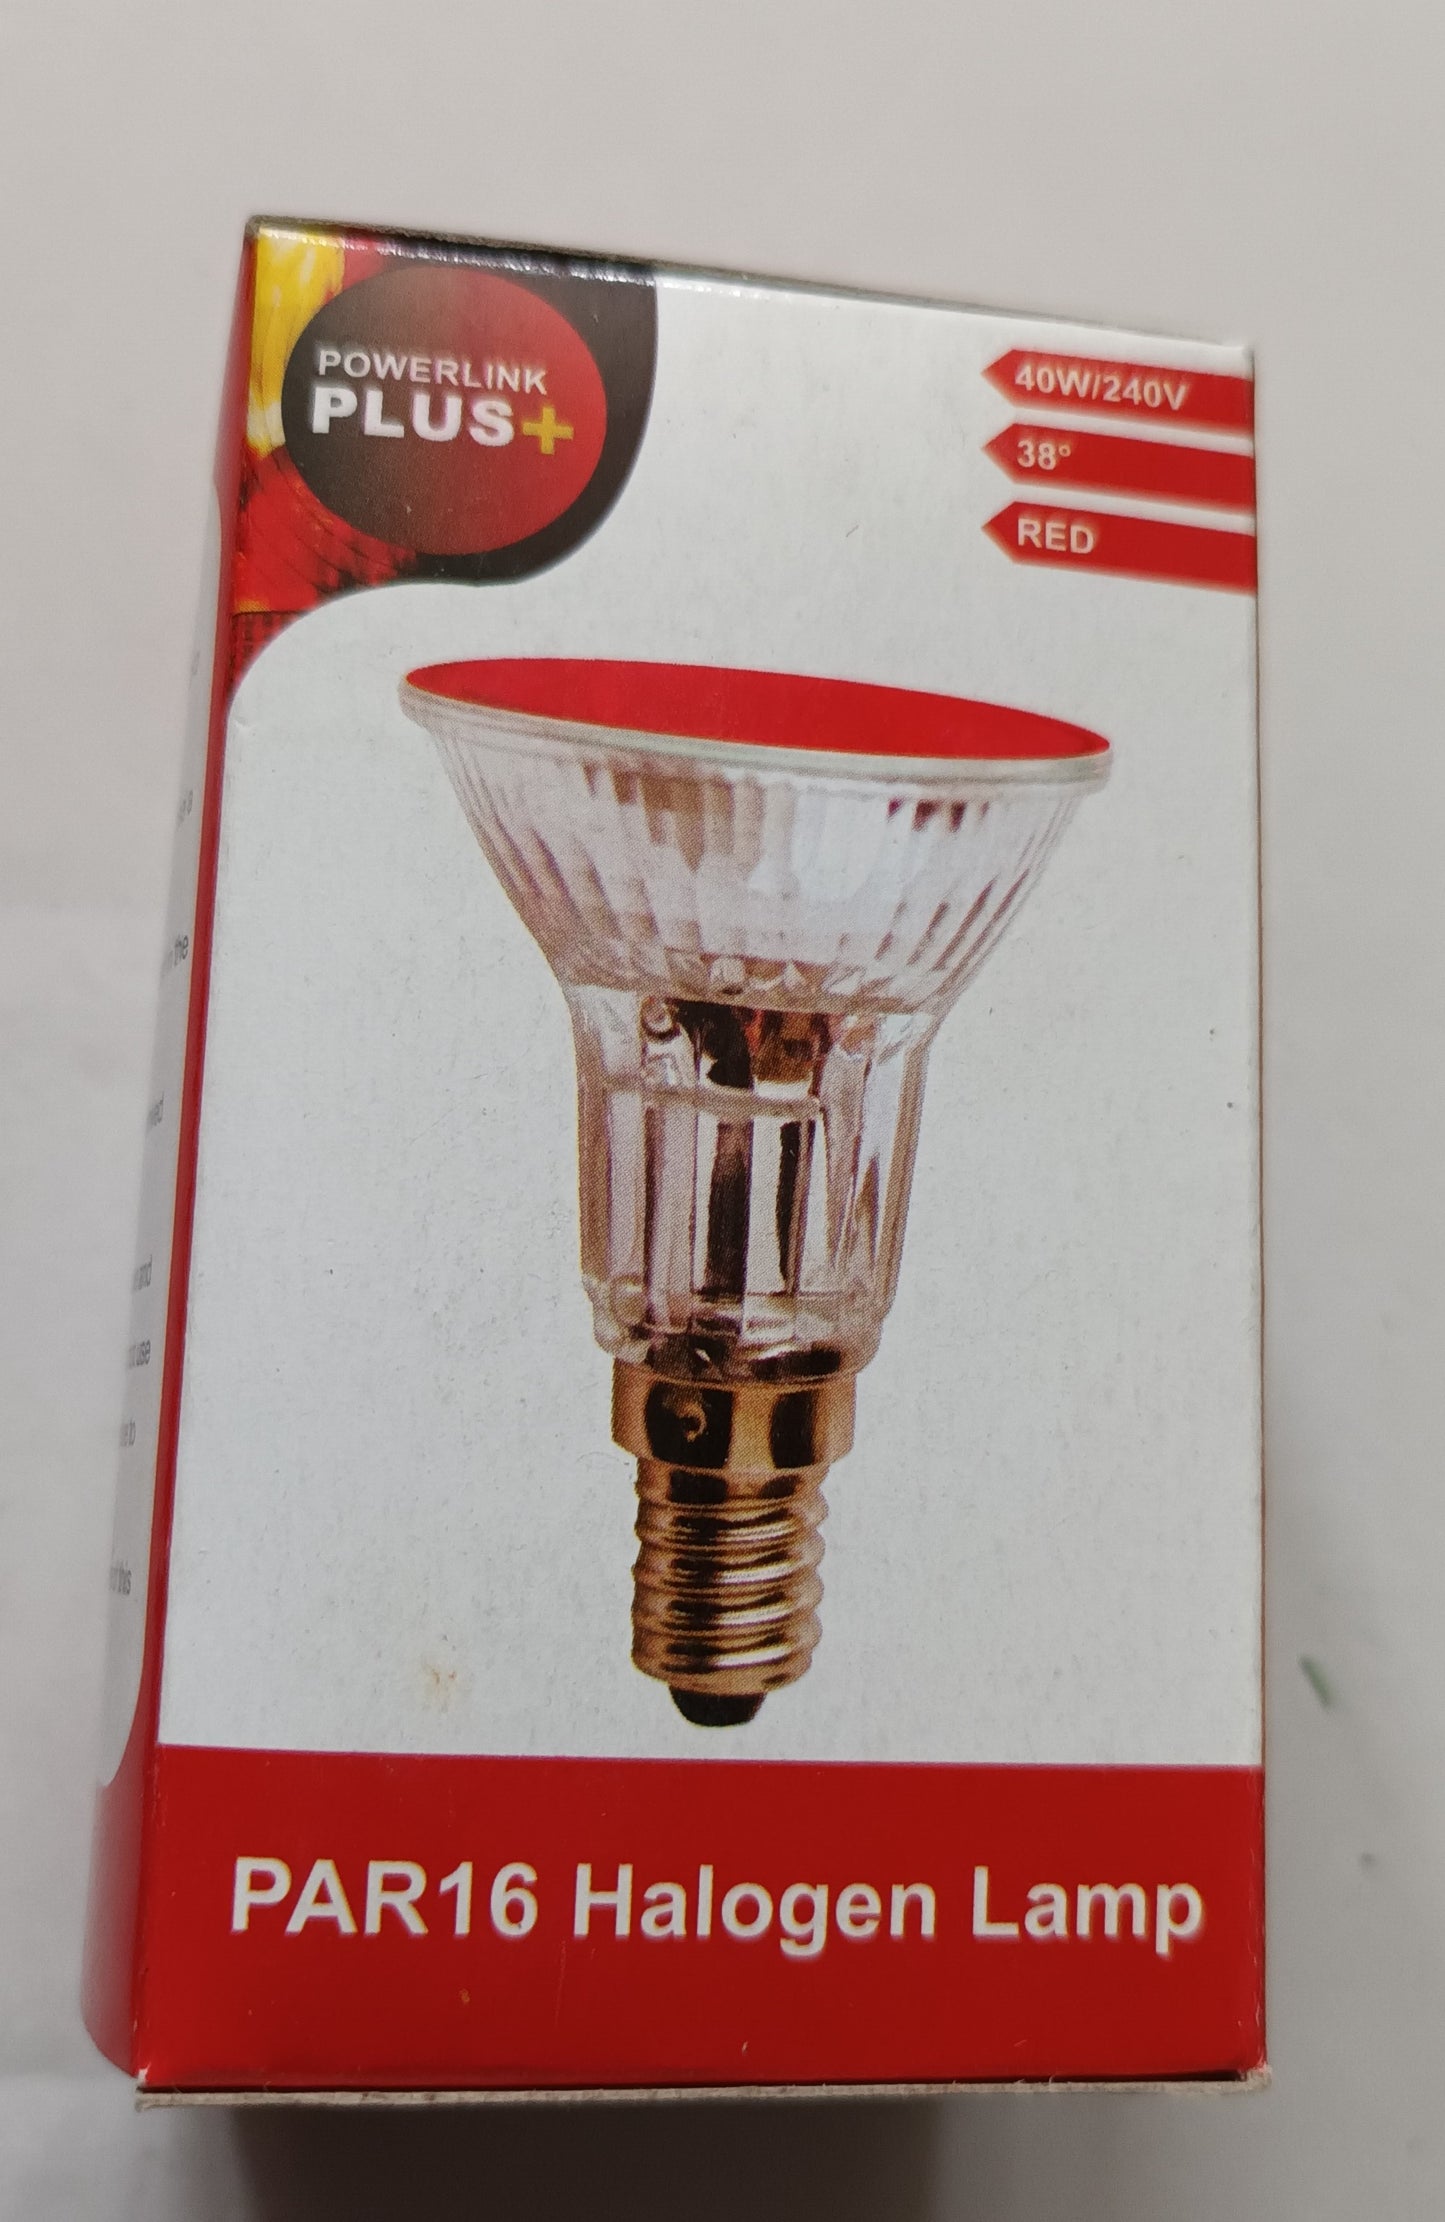 10 x Par16 / R50 Halogen Spot SES / E14  40W   Coloured Light Bulbs